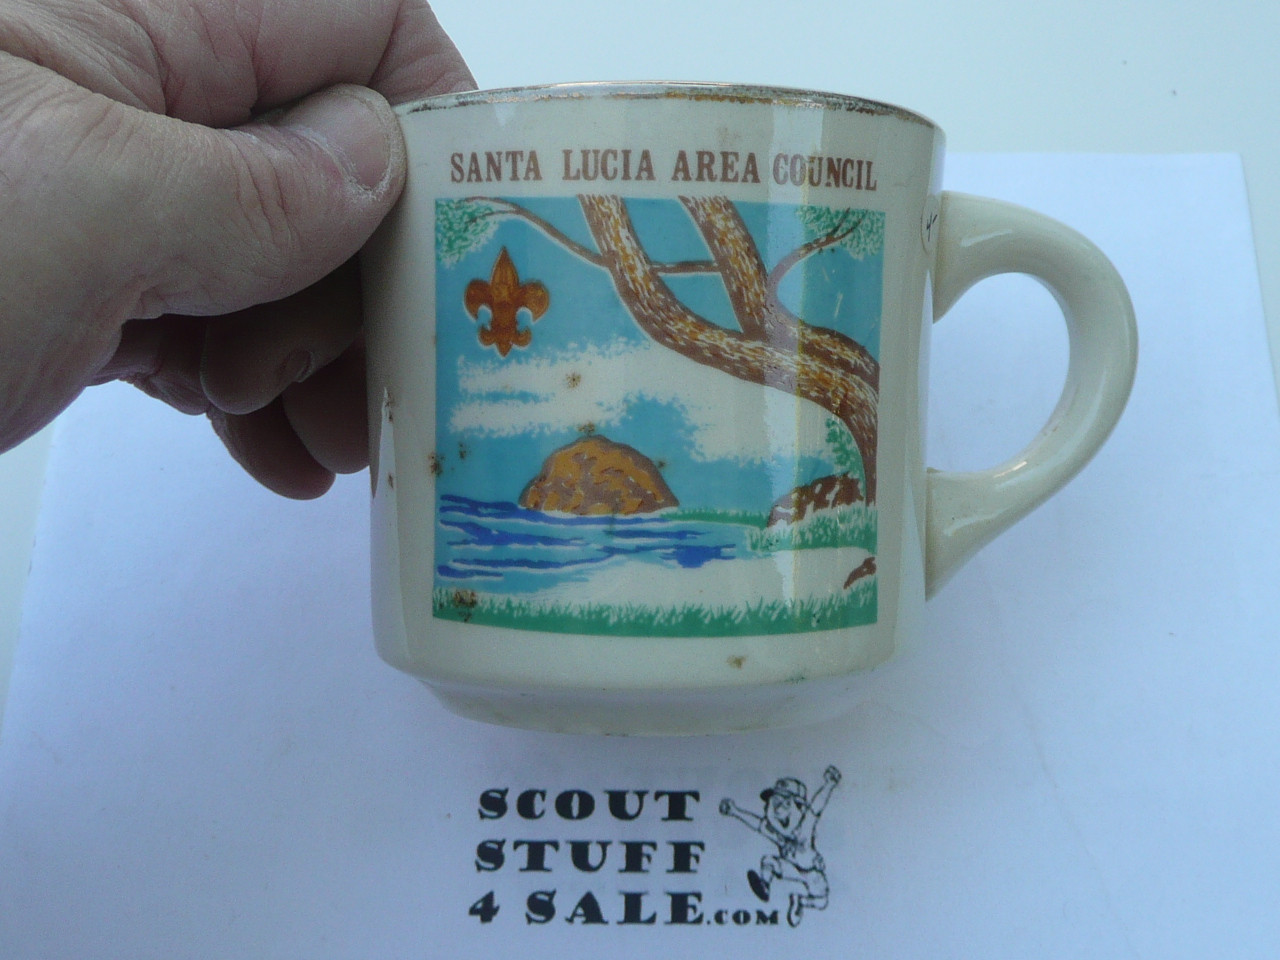 Santa Lucia Area Council Mug - Boy Scout